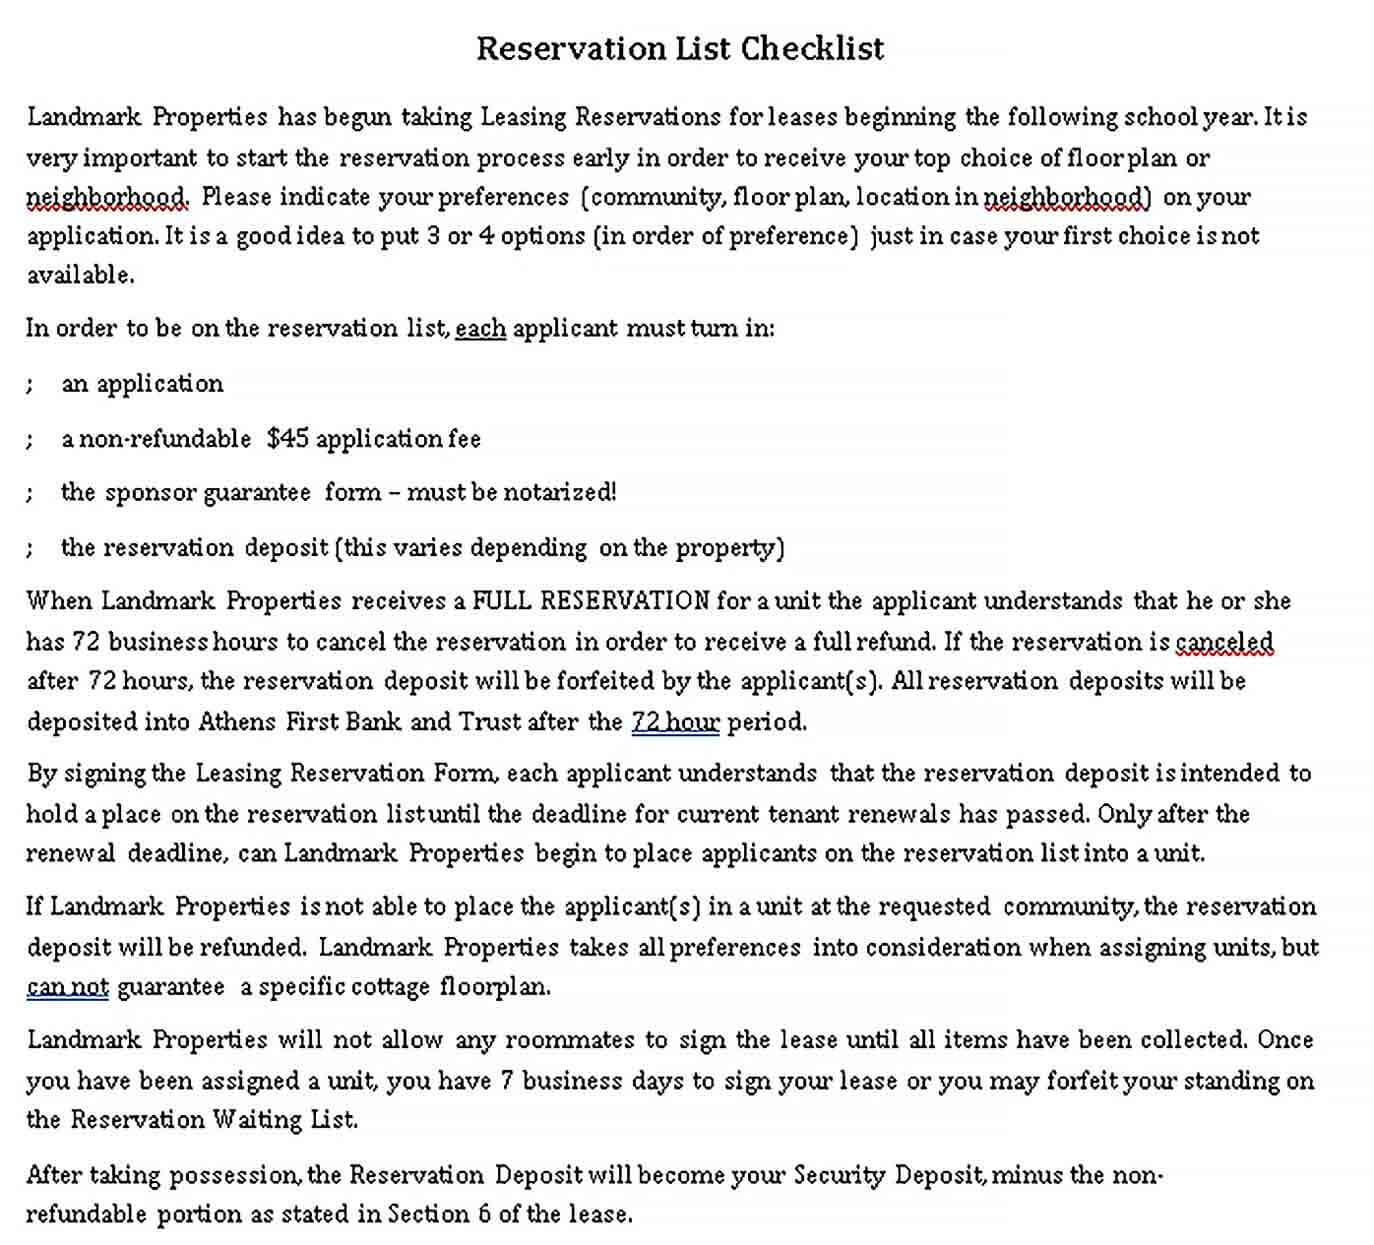 Reservation Checklist Template 2